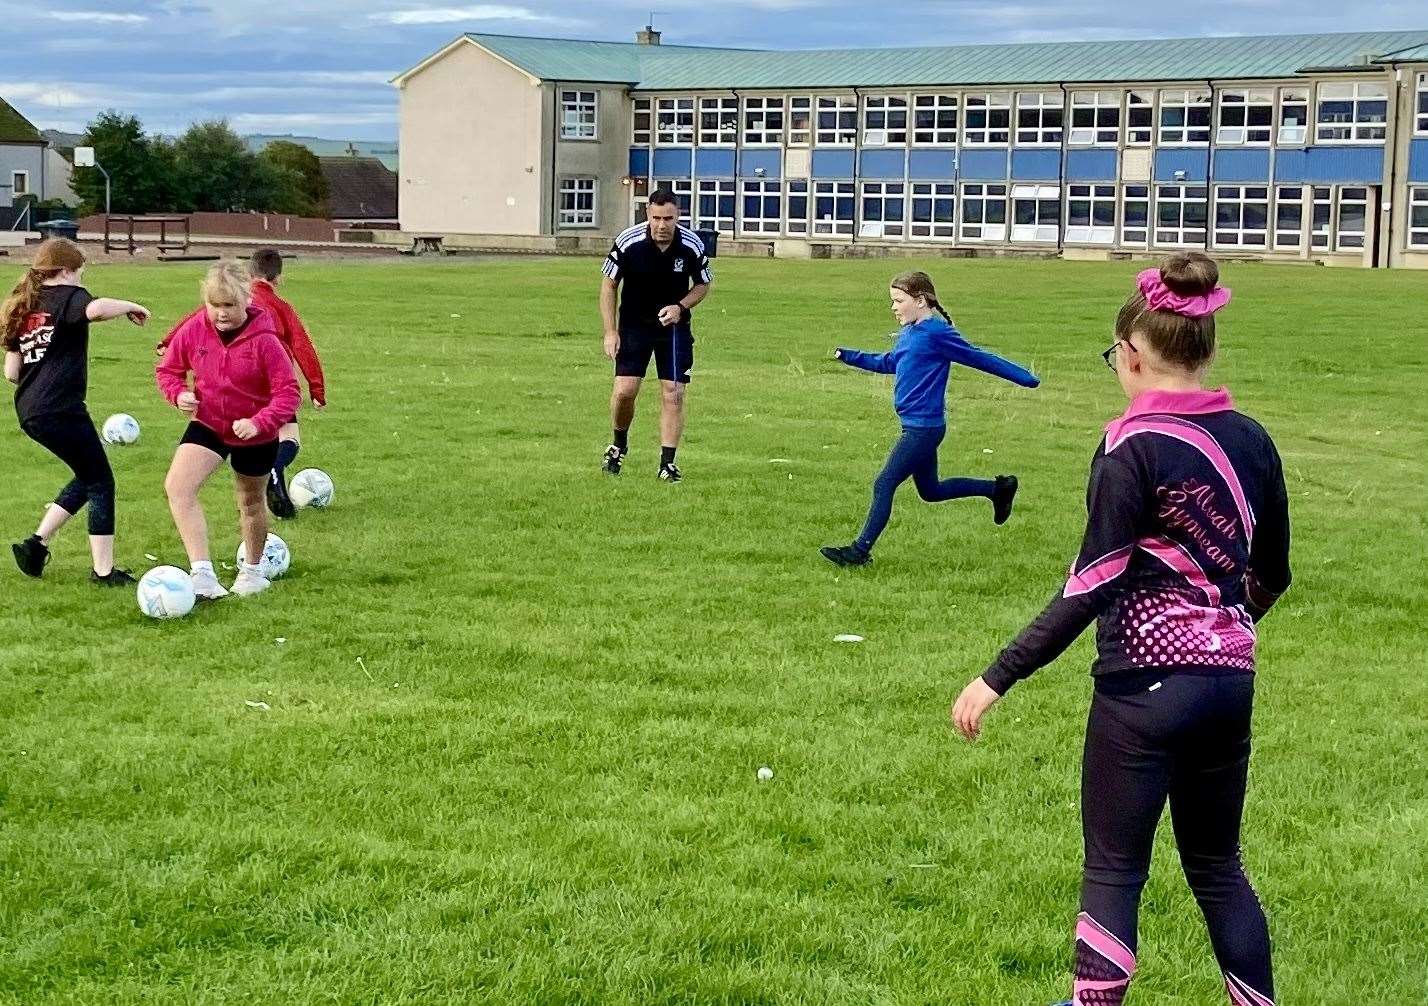 Pupils took part in sport at Macduff Primary School.